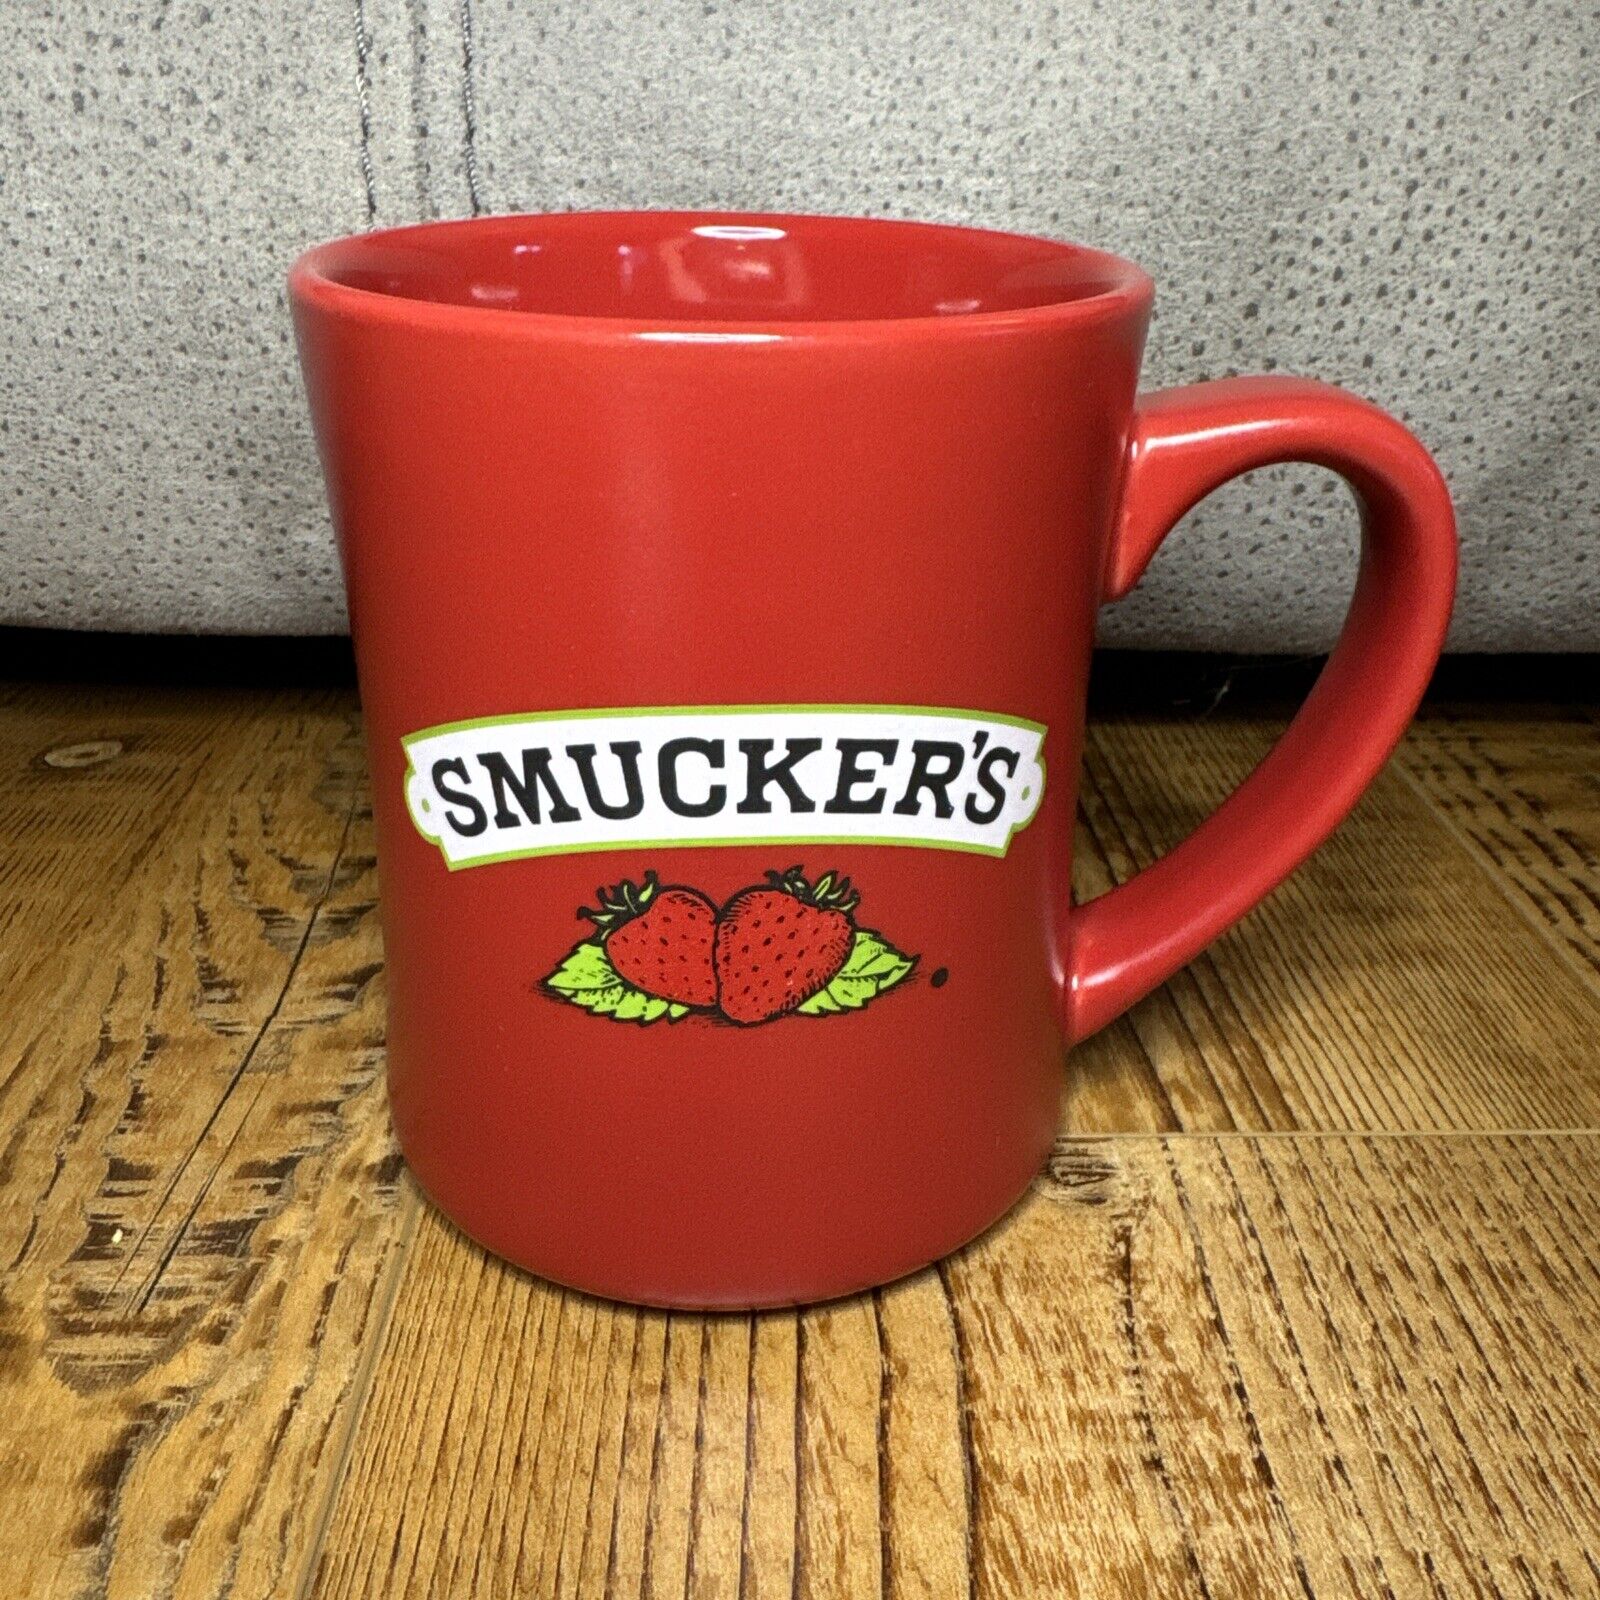 Smuckers Strawberry Preserves Jelly Red Coffee Cup Mug RFSJ Inc.